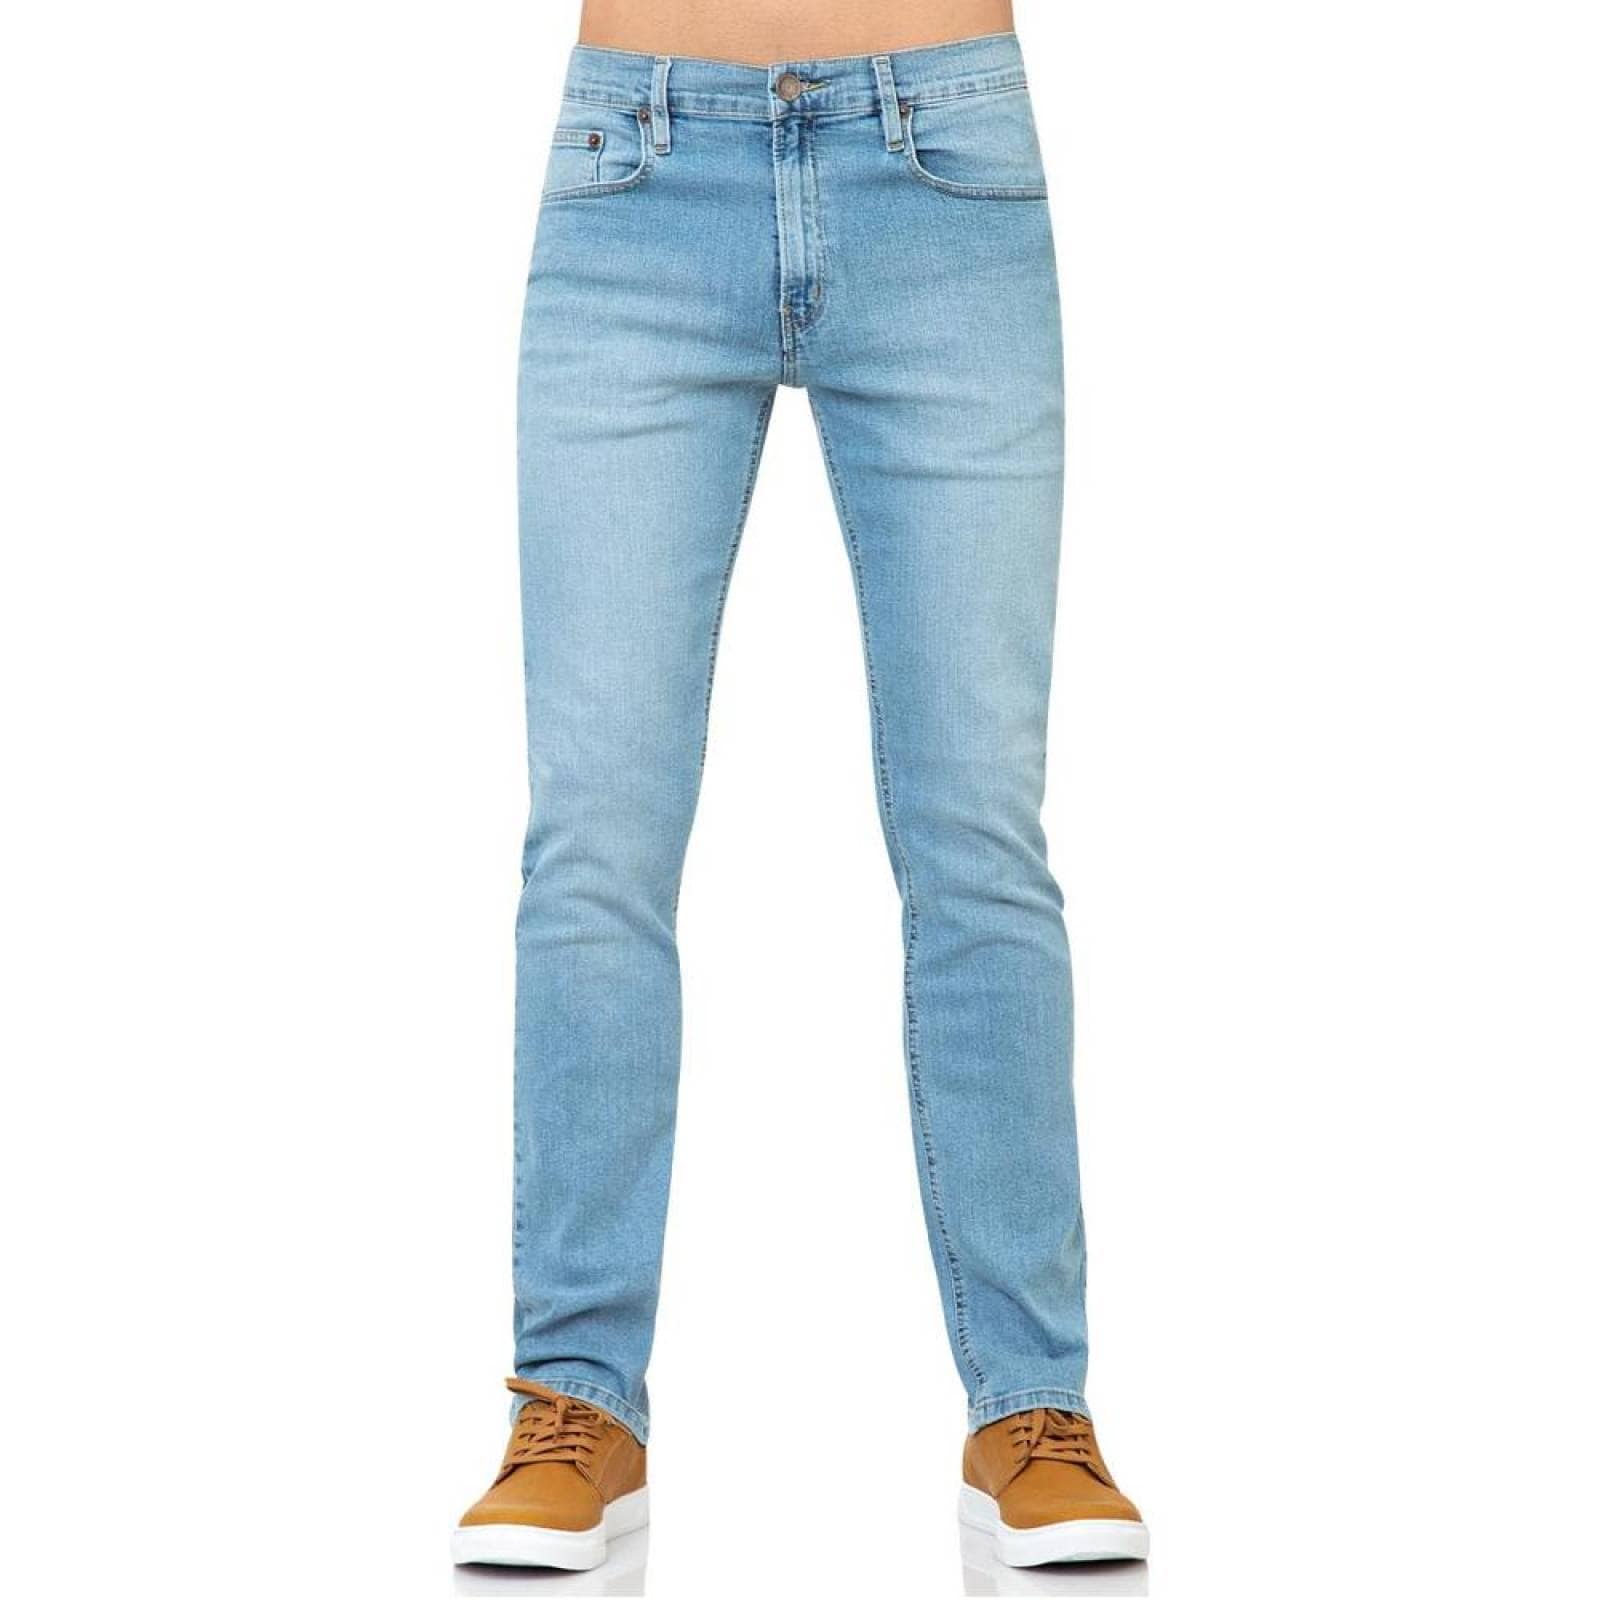 Jeans Basico Hombre Oggi Top 59103116 Mezclilla Stretch